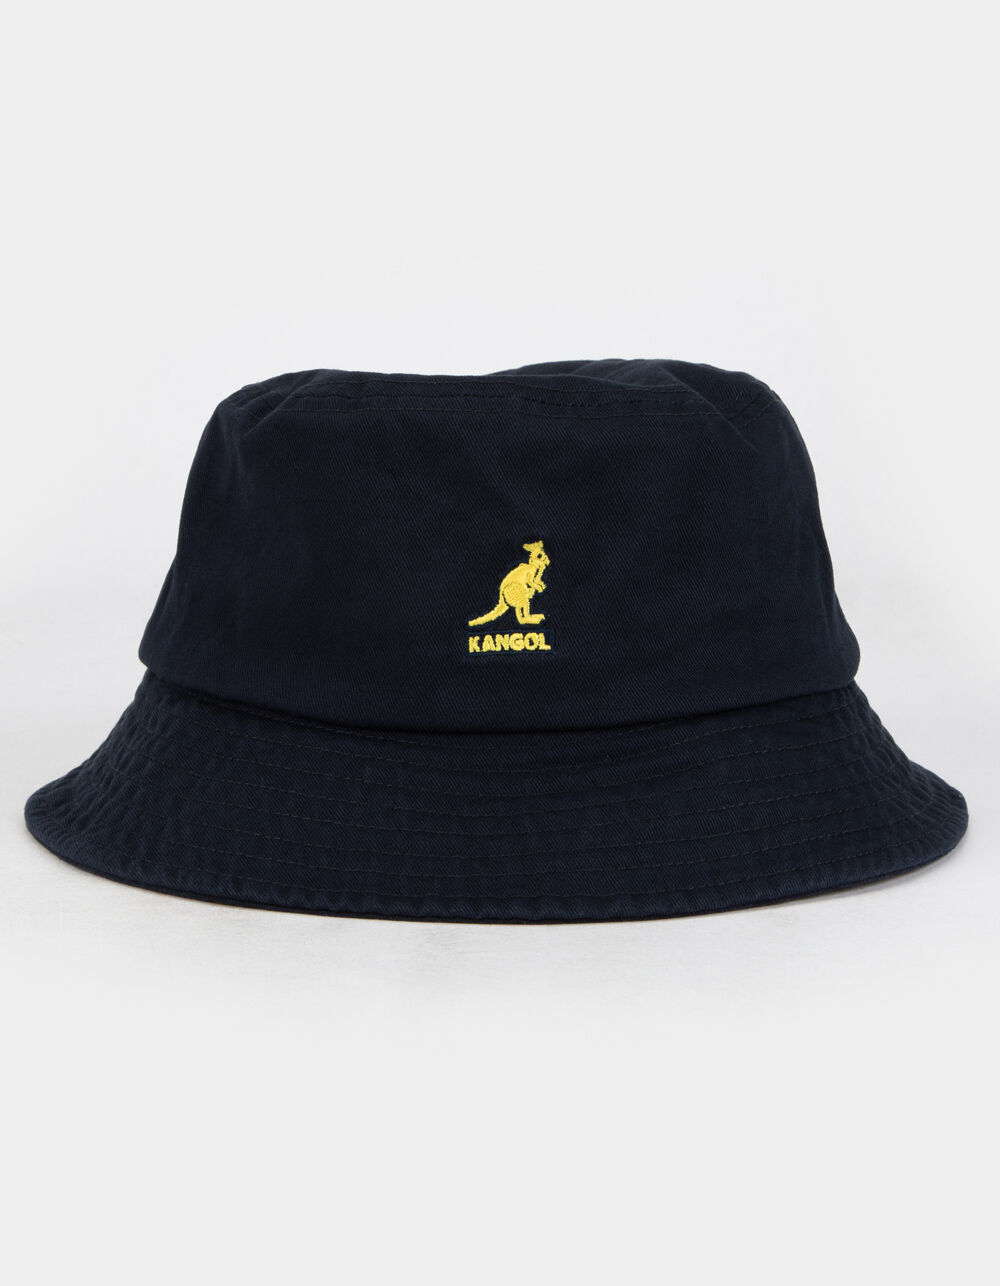 KANGOL Washed Navy Bucket Hat - NAVY | Tillys